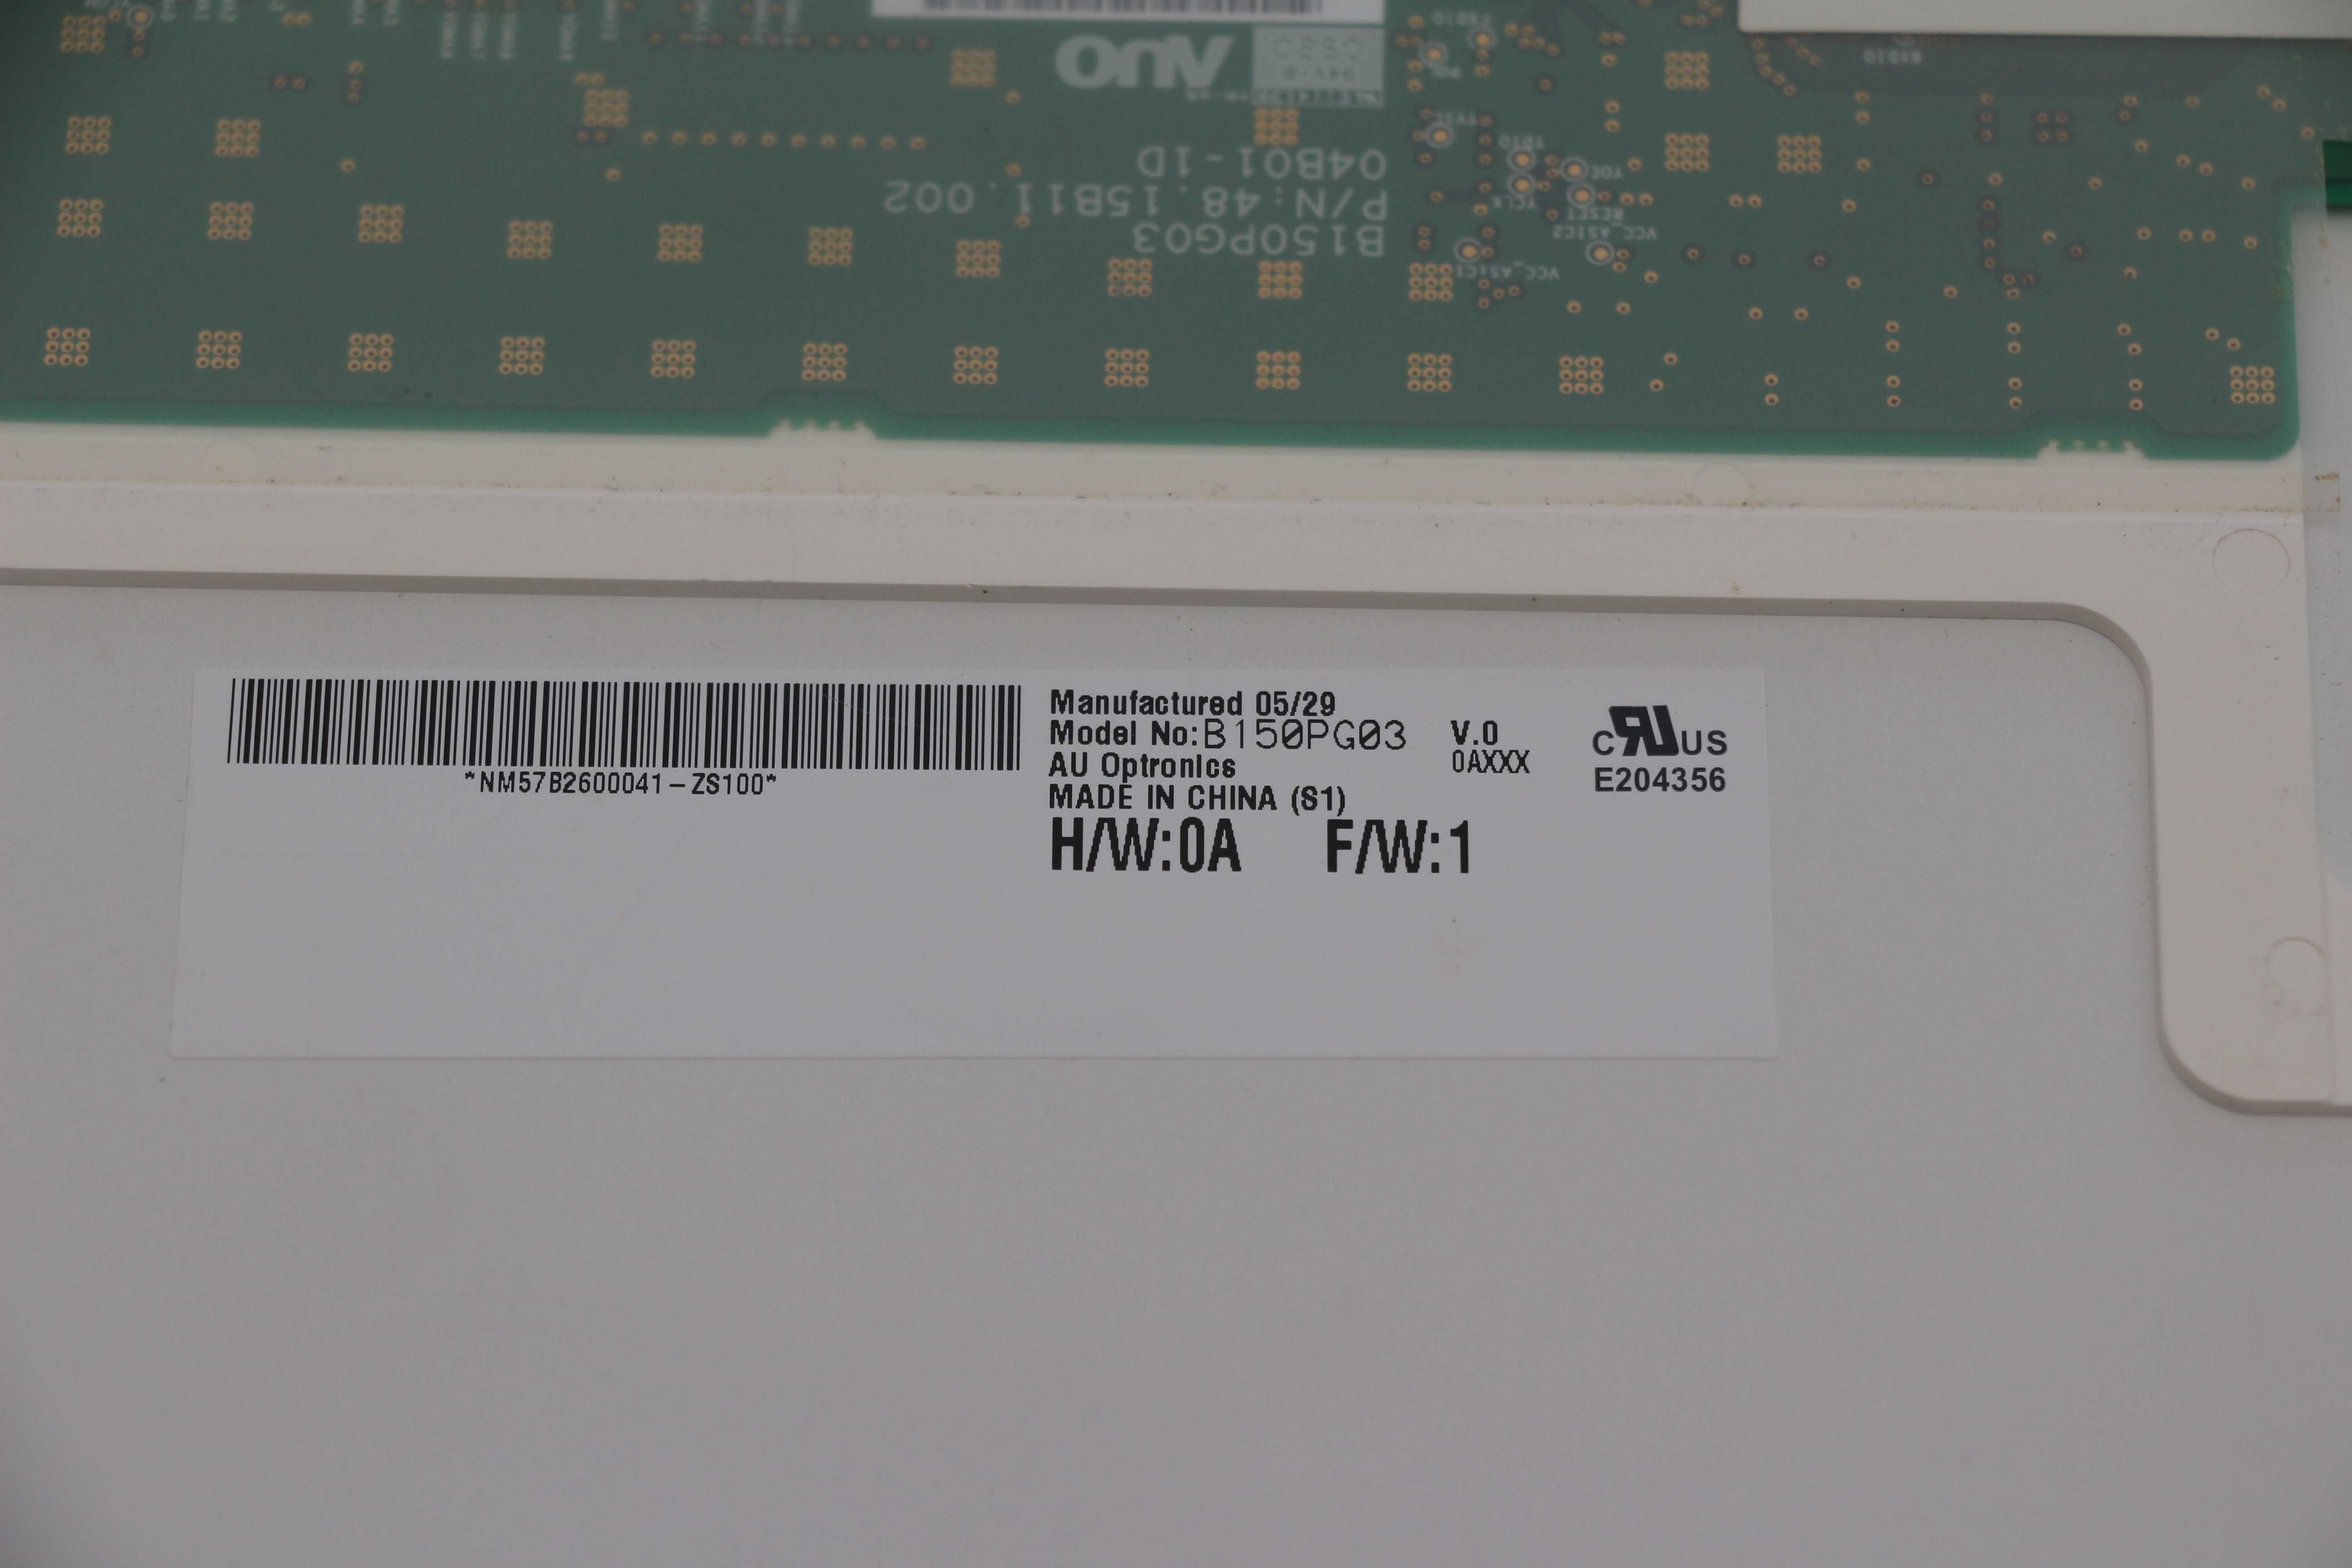 Ecran LCD LED TFT monitor 15" B150PG03 - Impecável - ENTREGA IMEDIATA